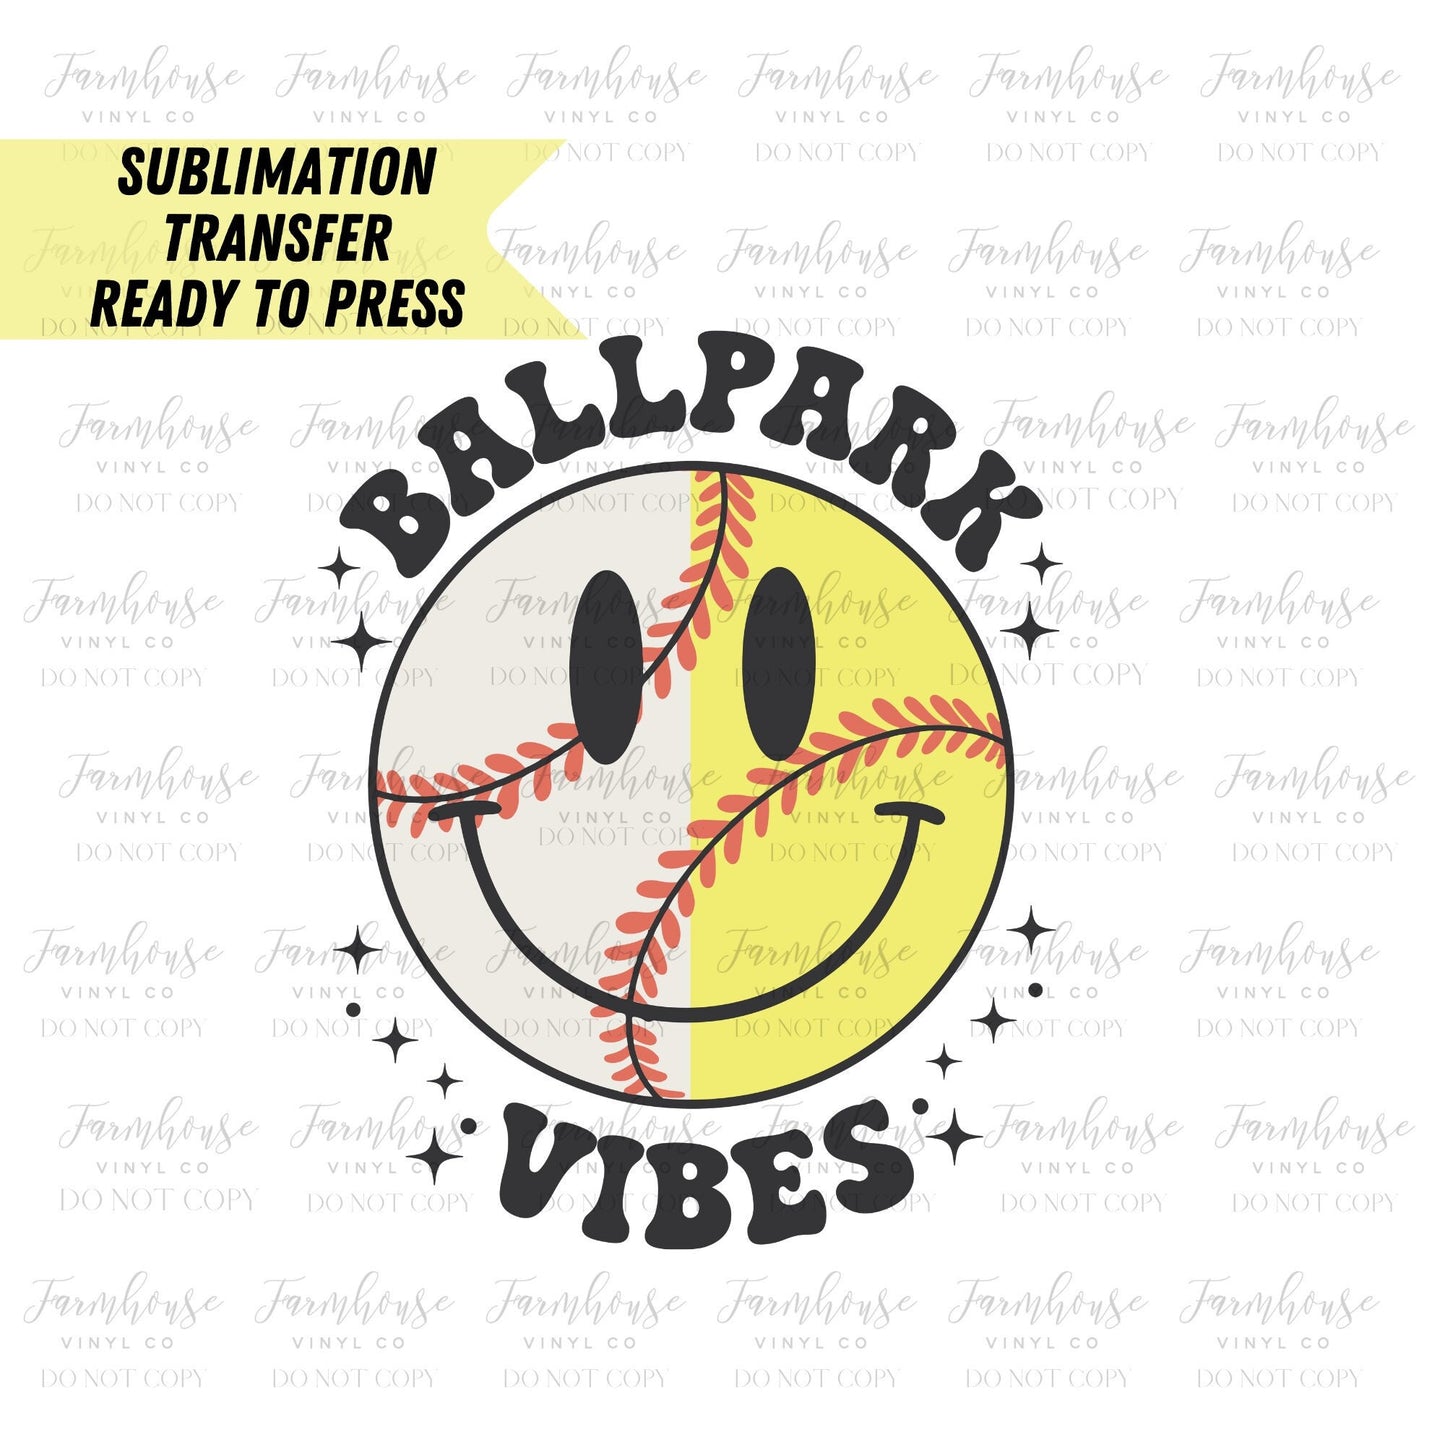 Ball Park Vibes Retro Smiley Face Ready to Press Sublimation Transfer - Farmhouse Vinyl Co